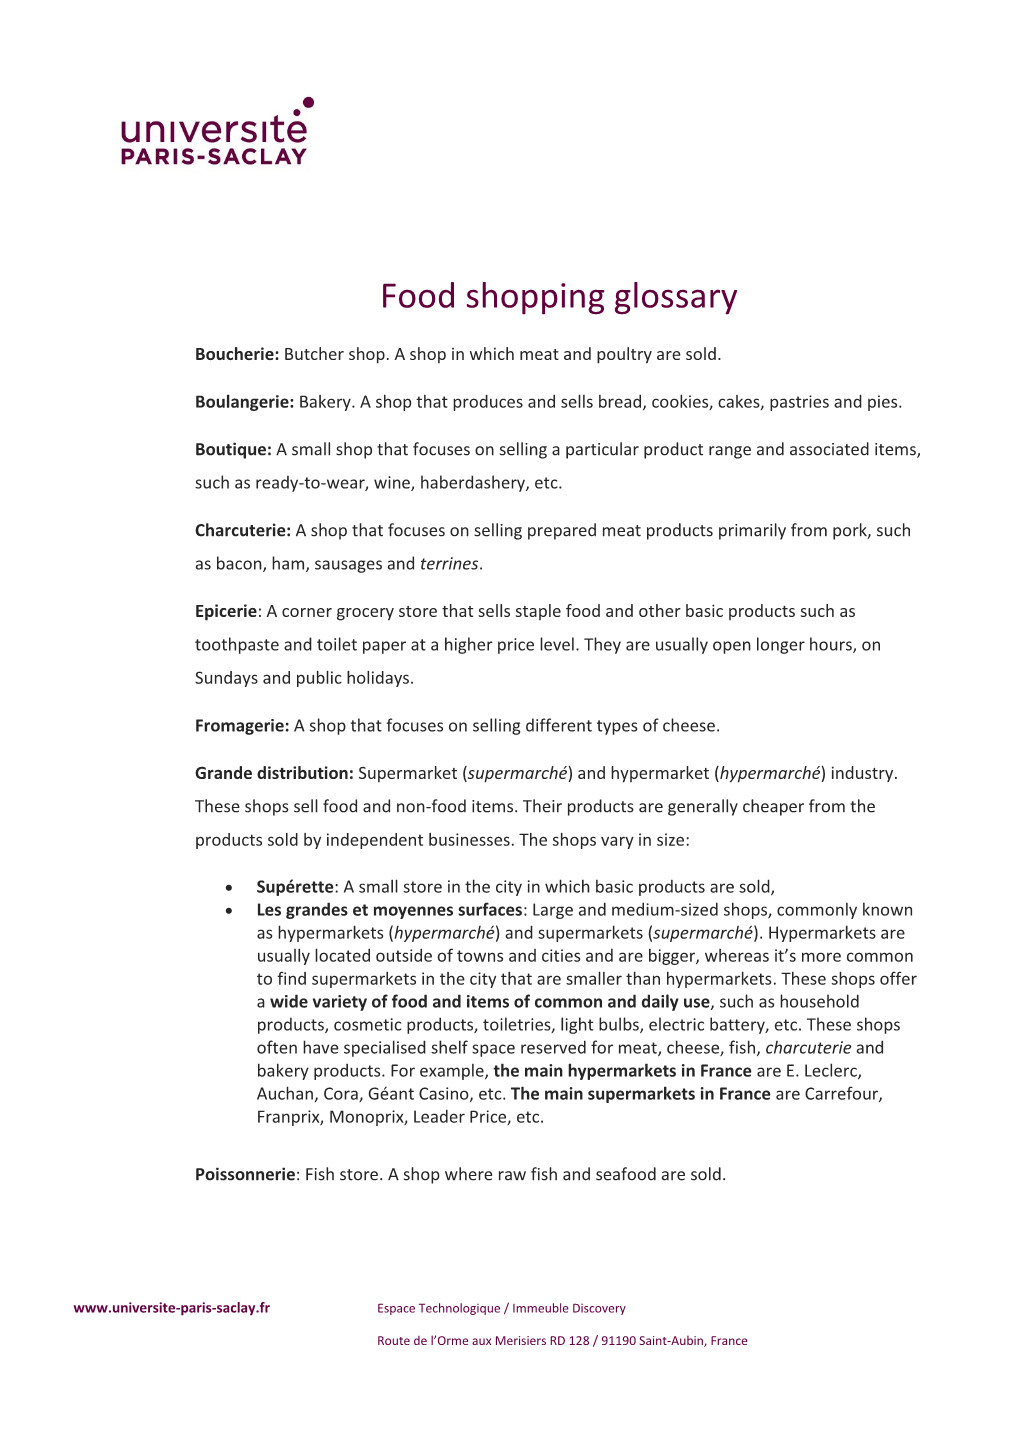 Food Shopping Glossary